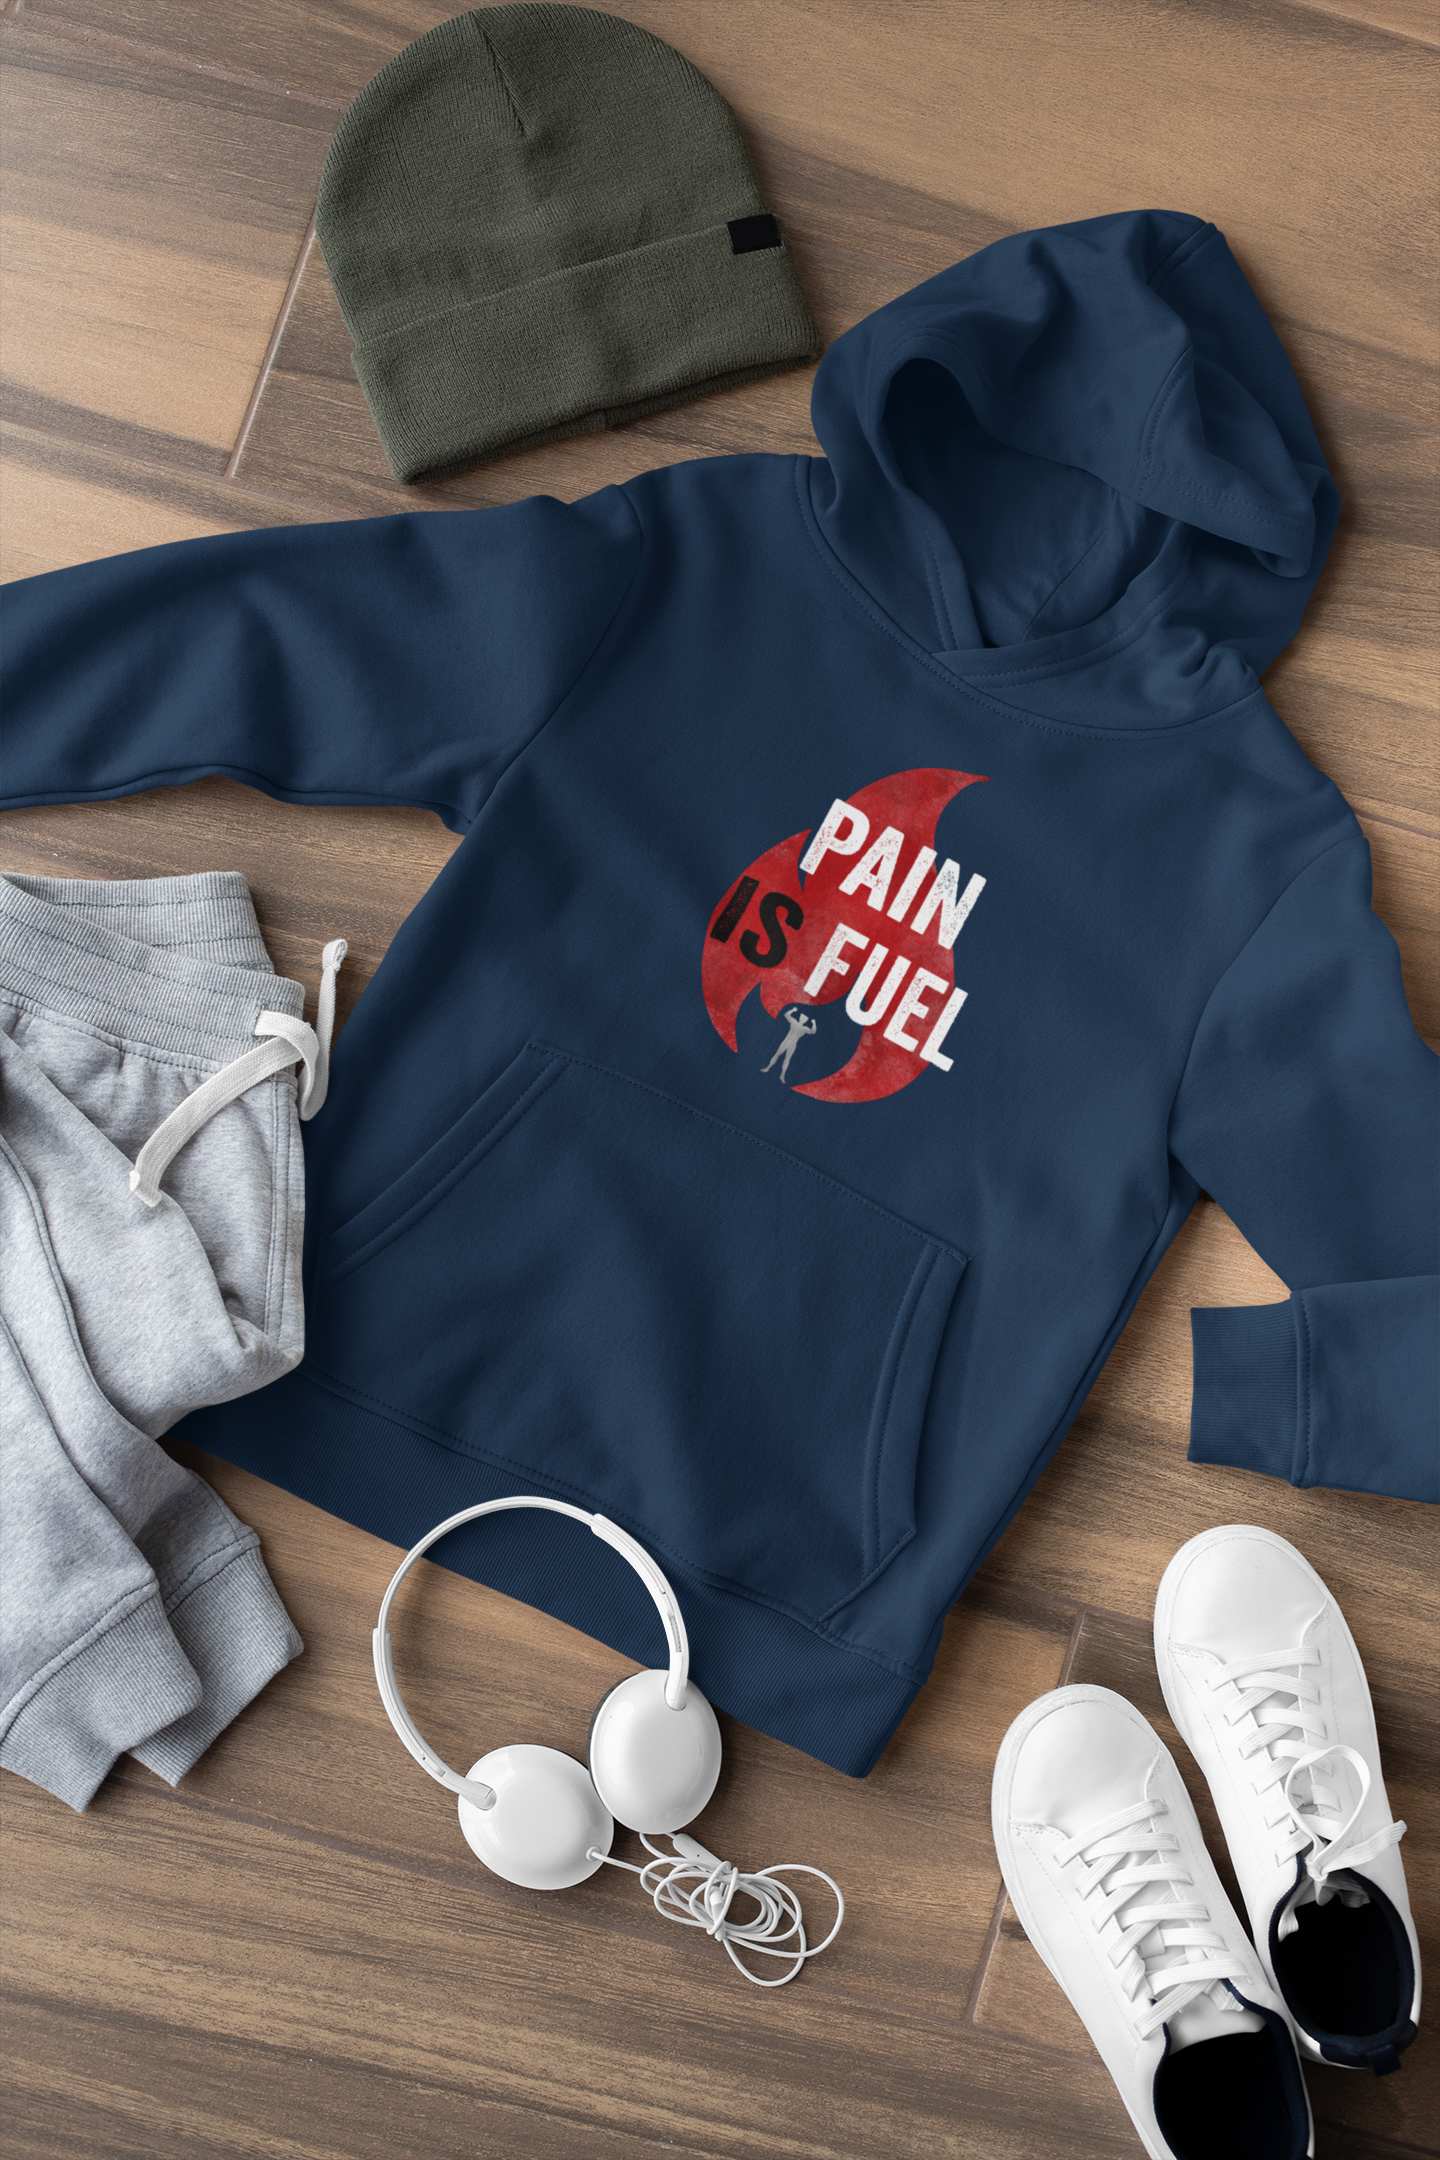 "PAIN IS FUEL" - WINTER HOODIES